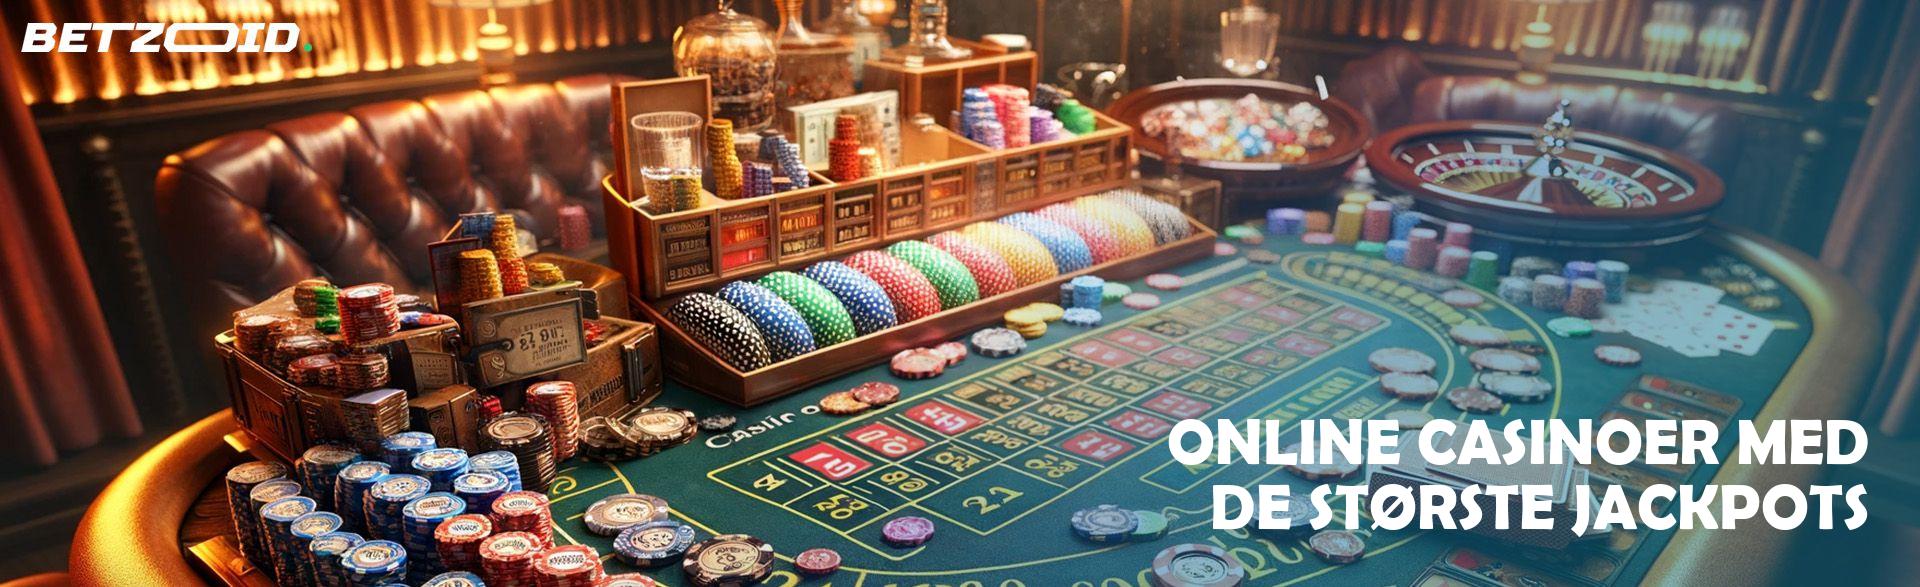 Online Casinoer Med De Største Jackpots.